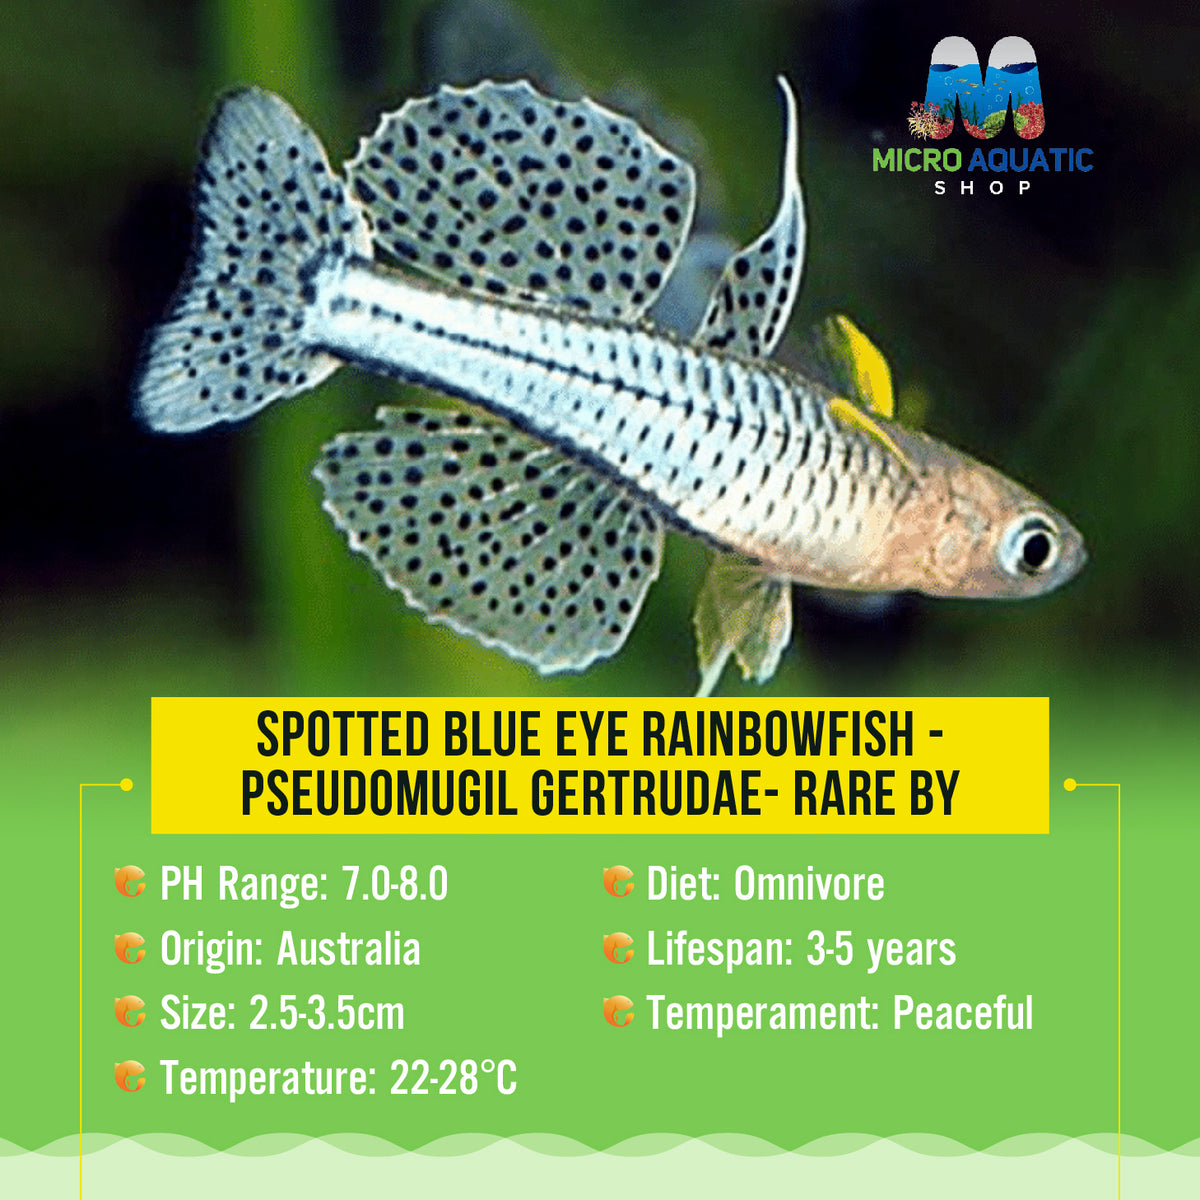 Spotted Blue Eye - Pseudomugil gertrudae- Rare by